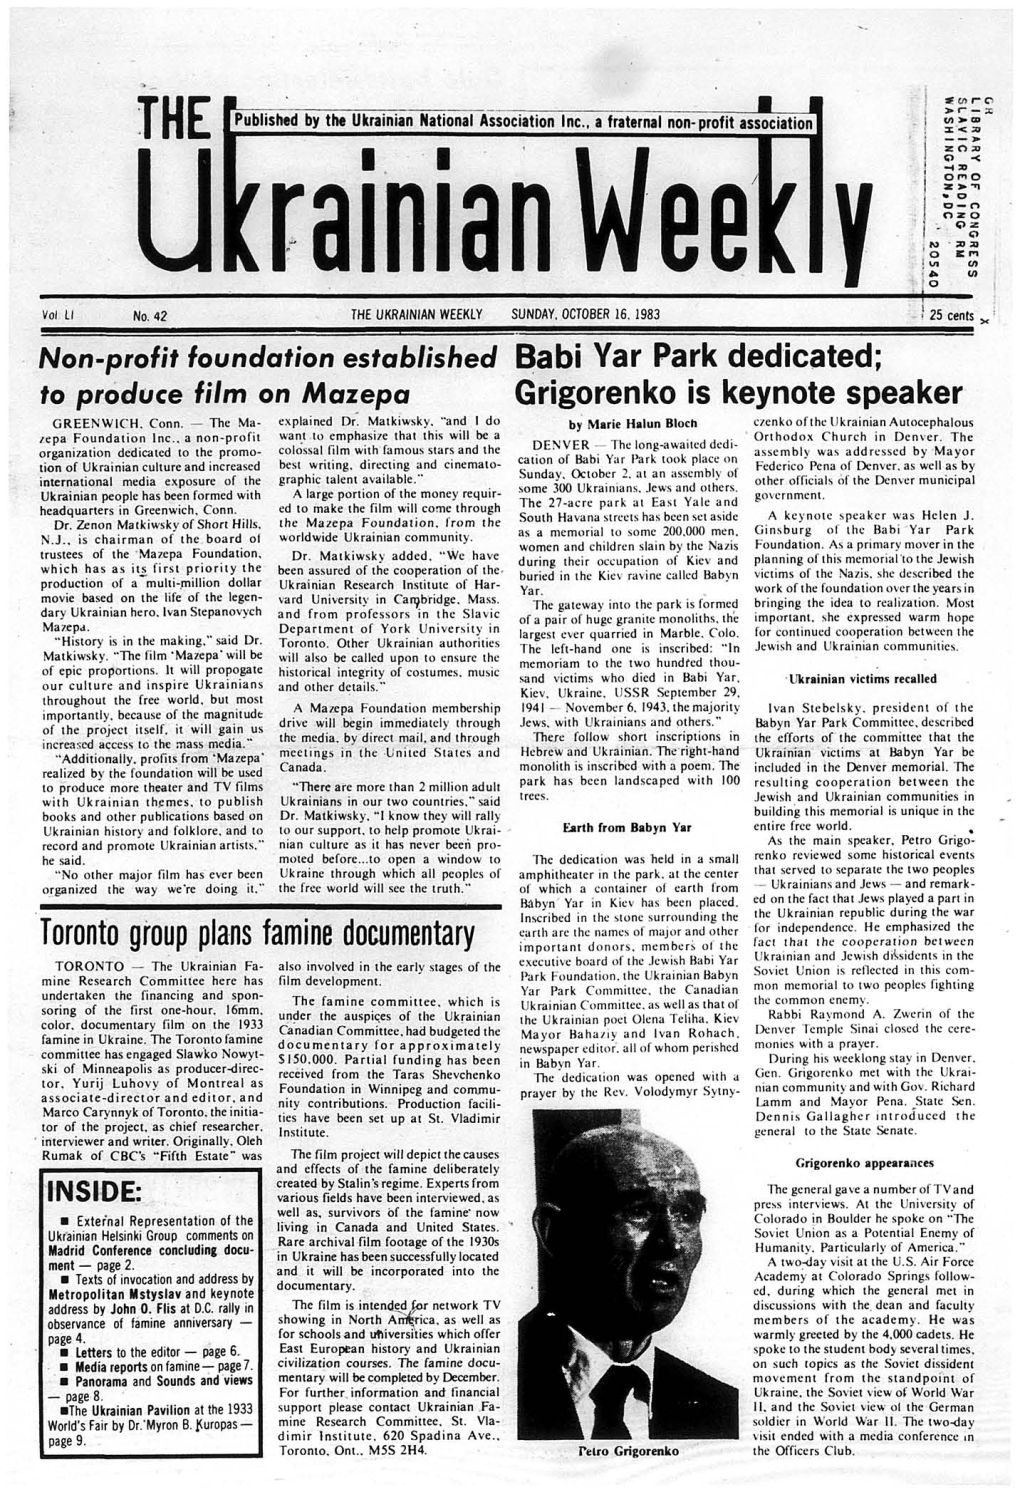 The Ukrainian Weekly 1983, No.42